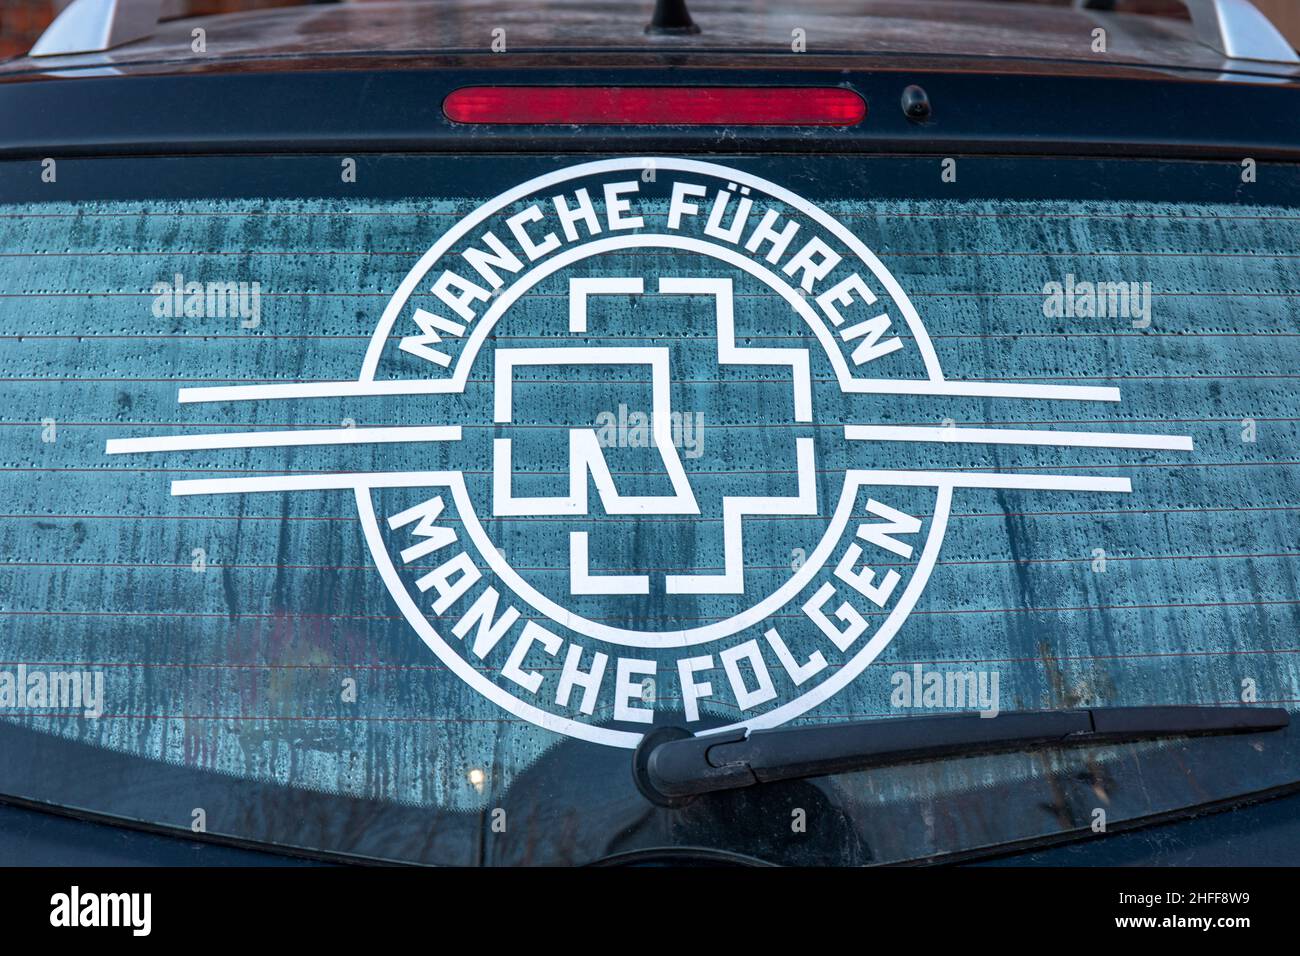 Manche Führen, Manche Folgen. Sticker or decal on car rear window. Stock Photo